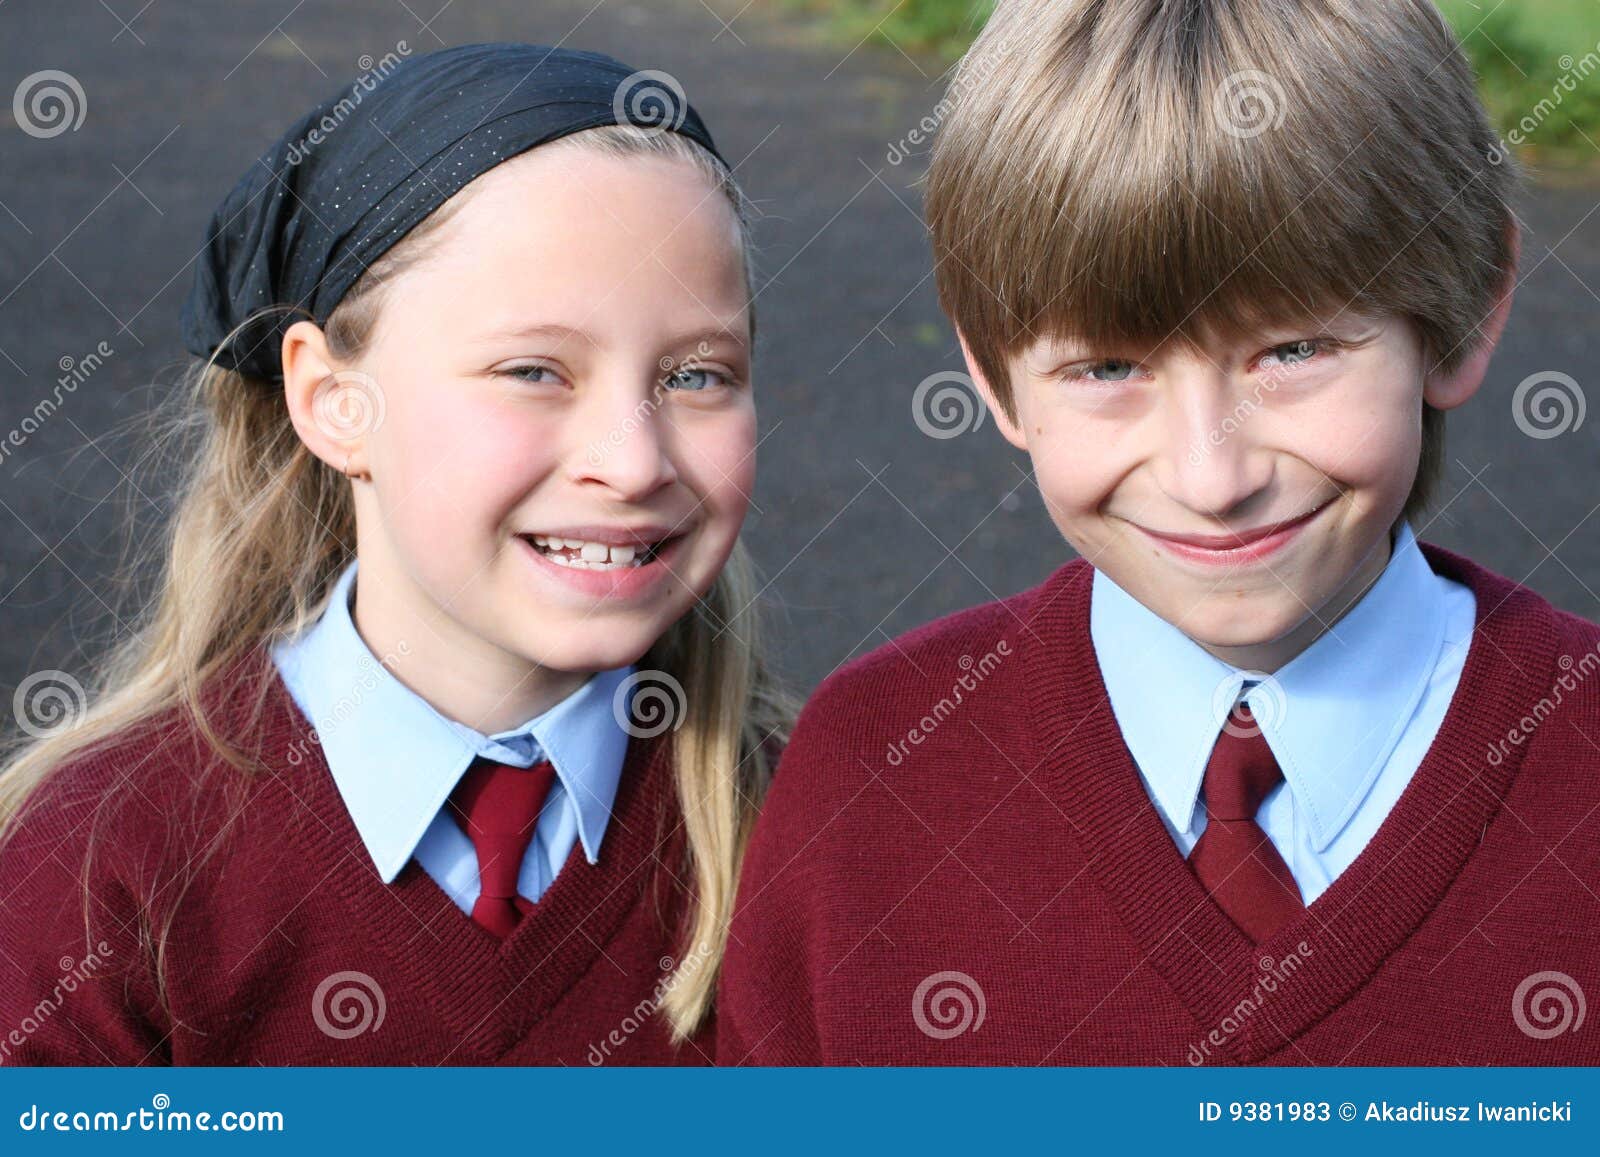 kids in school uniforms